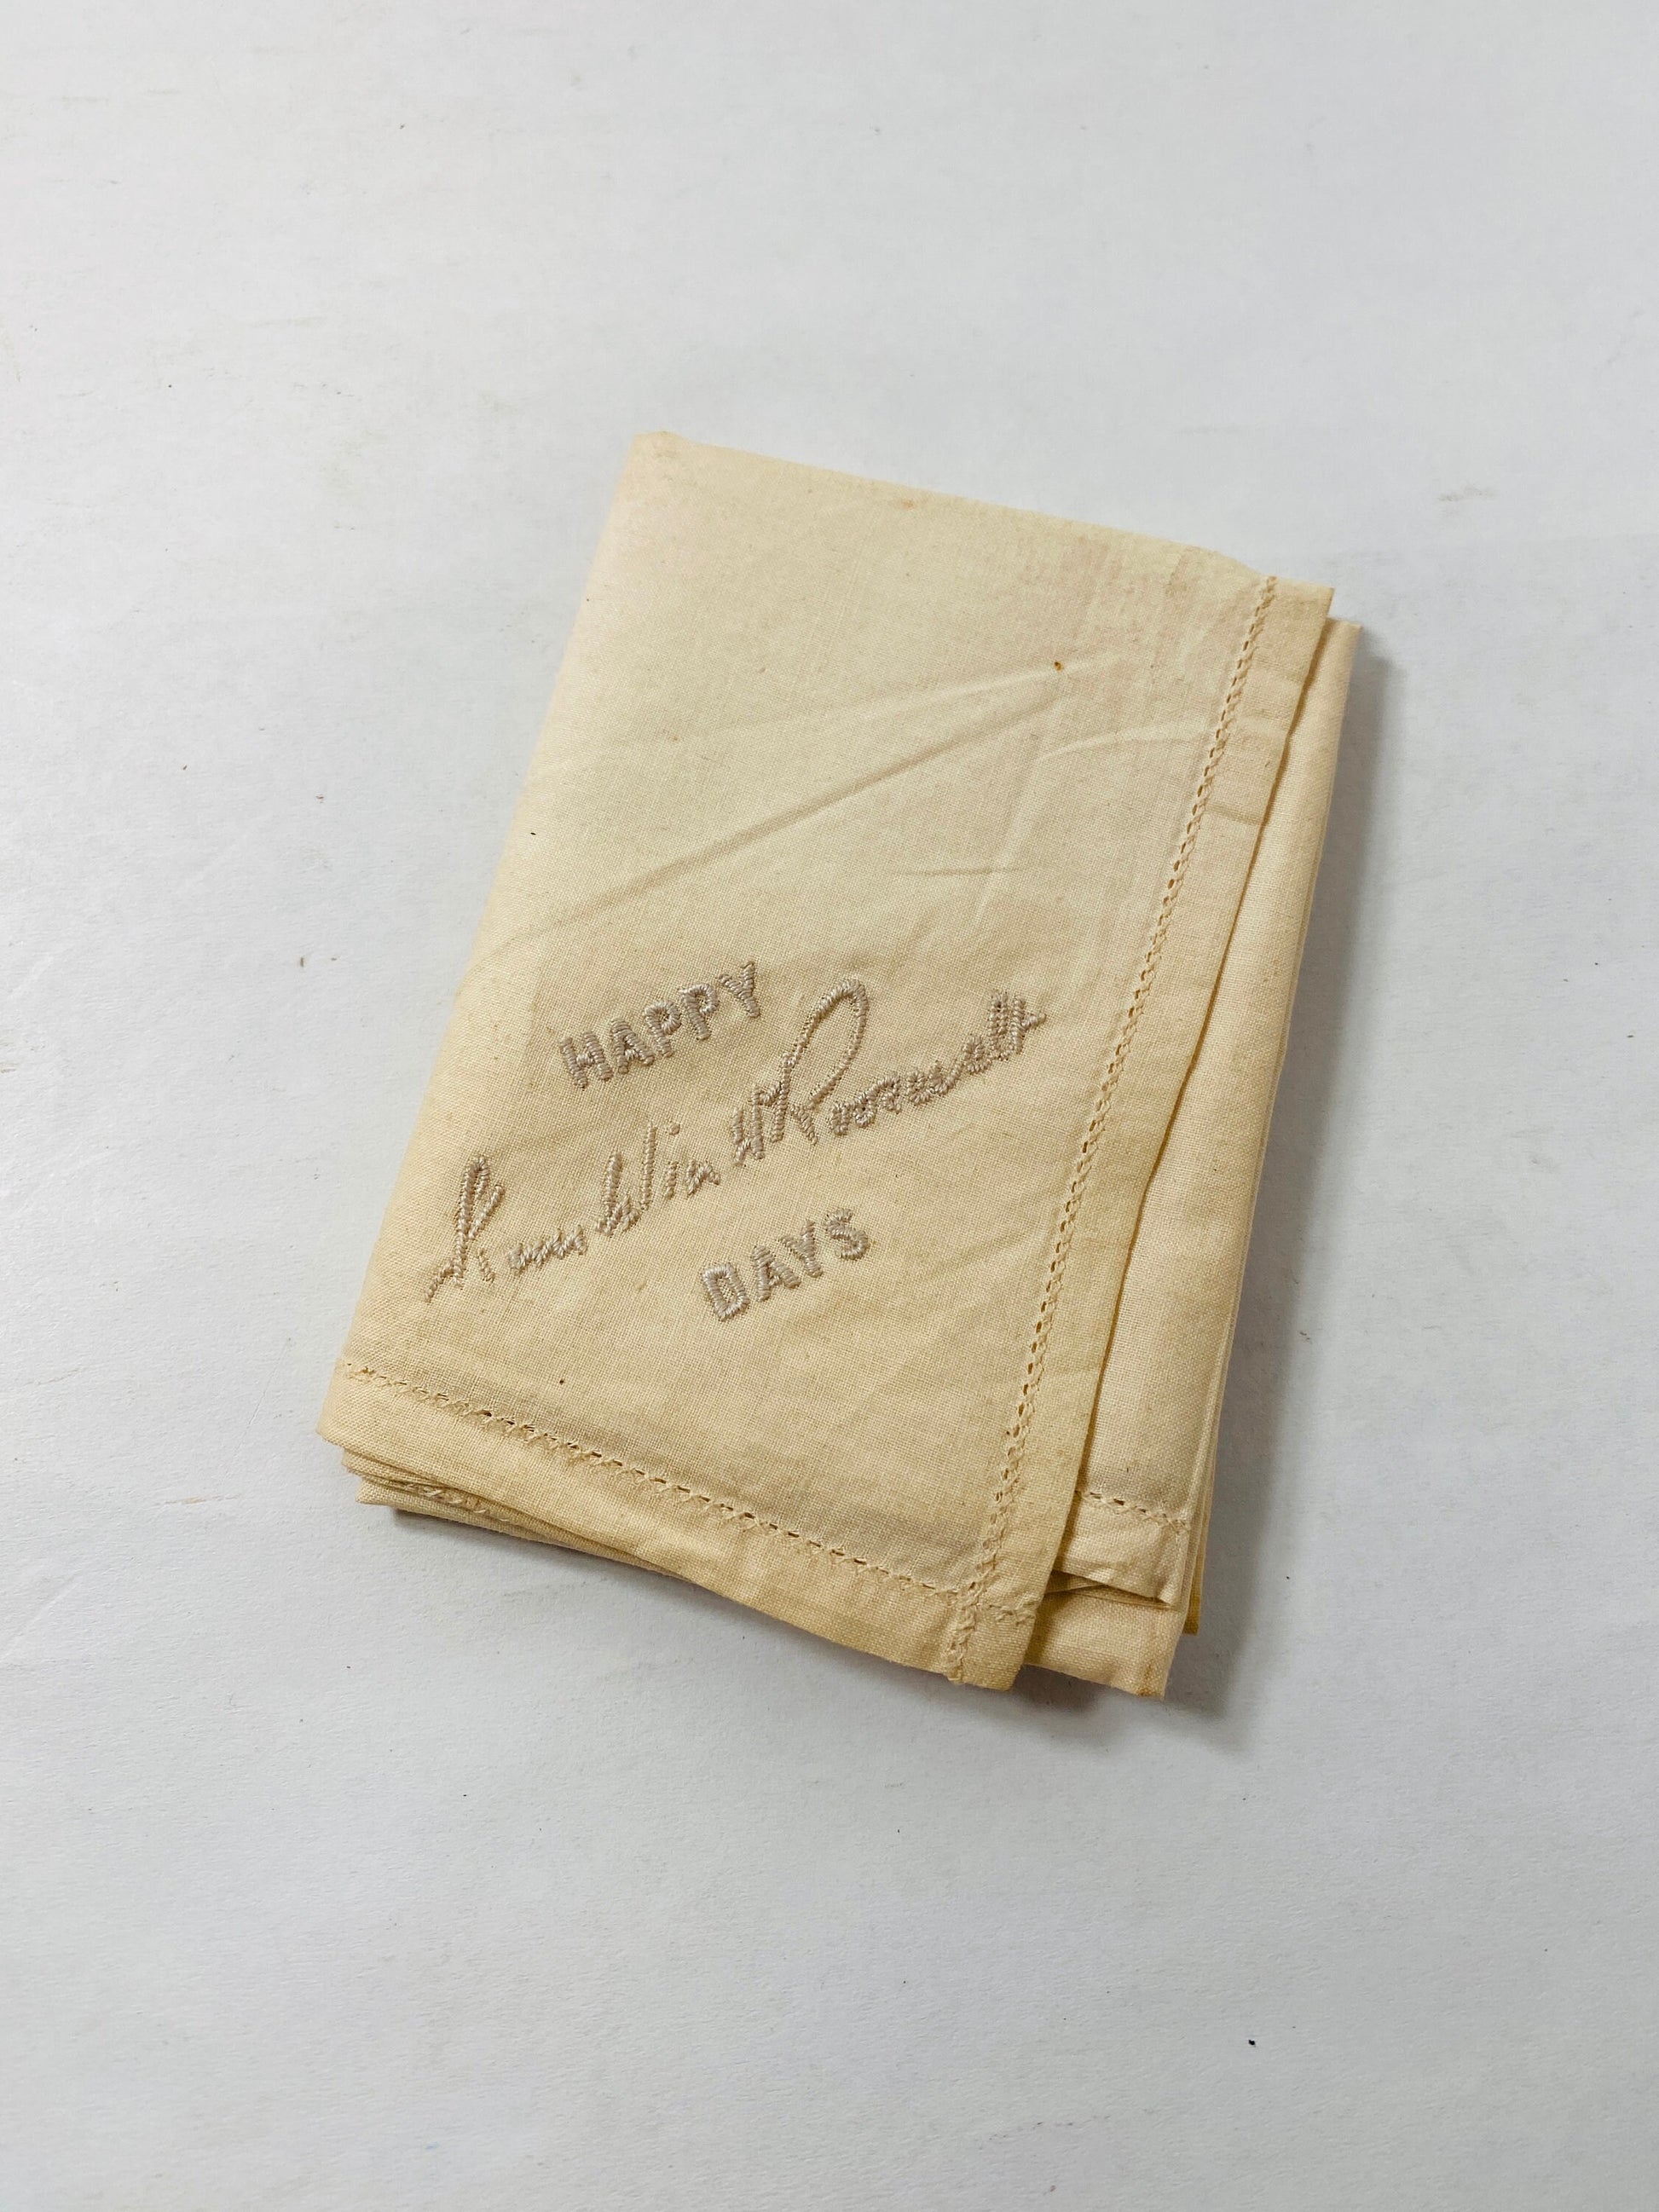 ROOSEVELT Presidential Campaign cotton handkerchief bandanna Kerchief vintage collectible US President circa 1940 military Americana